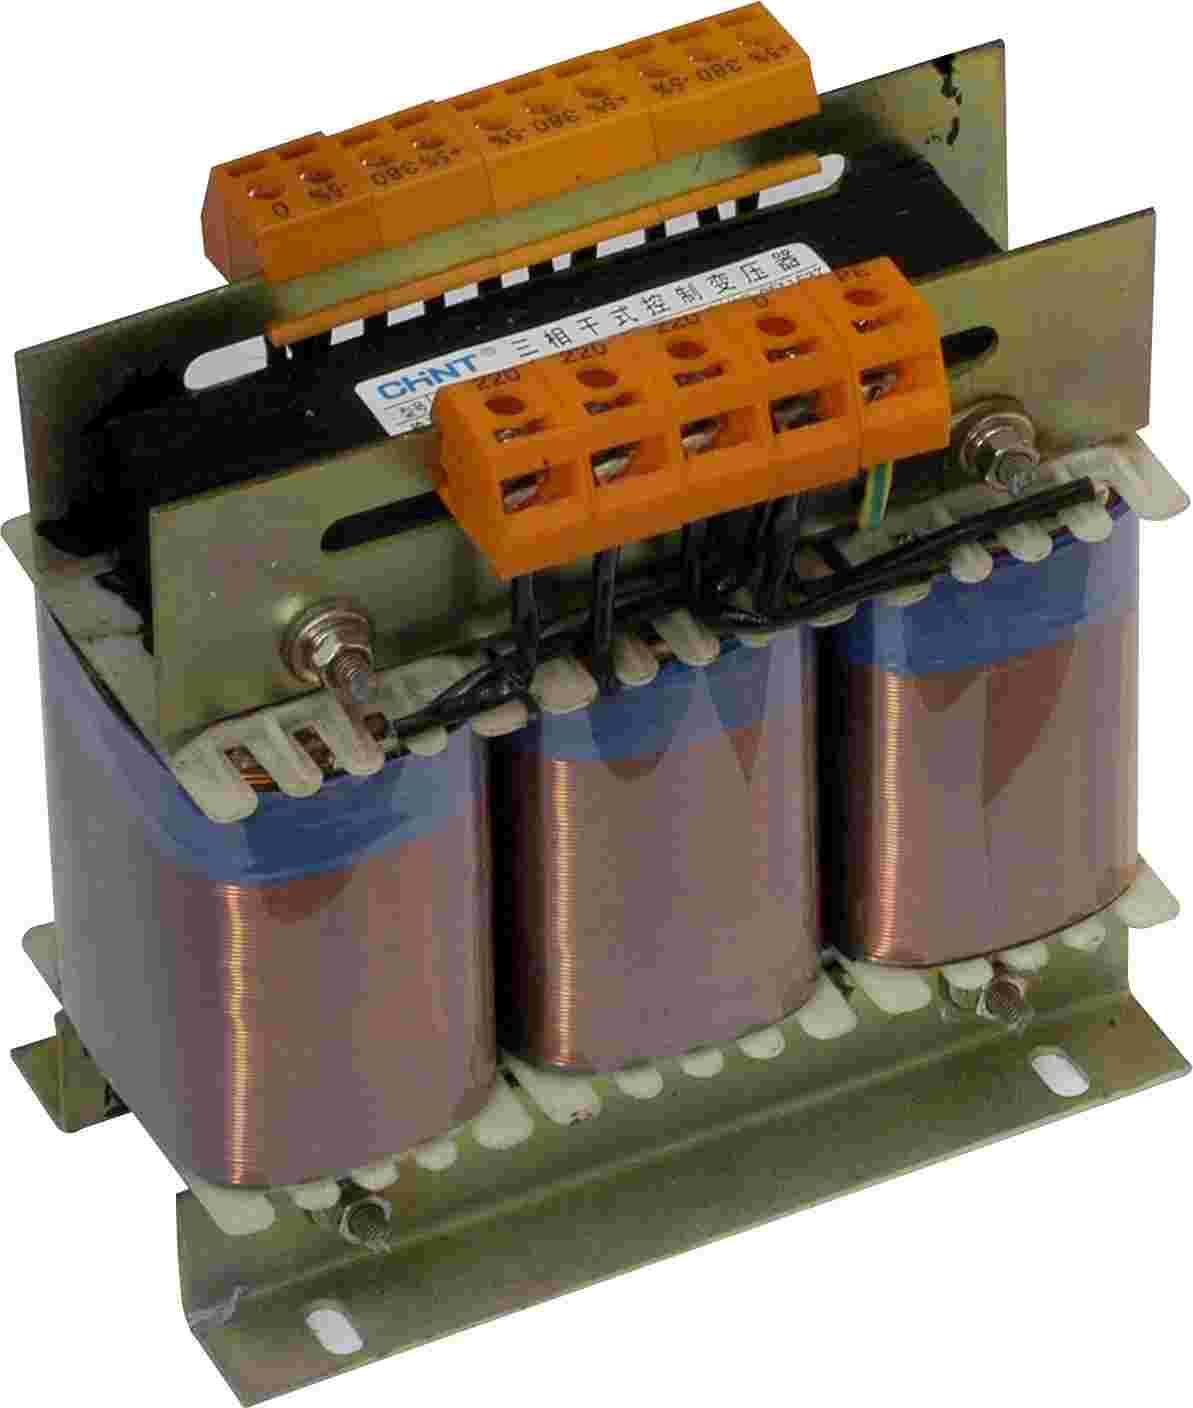 NSK 3 三相干式控制变压器侧俯图.png